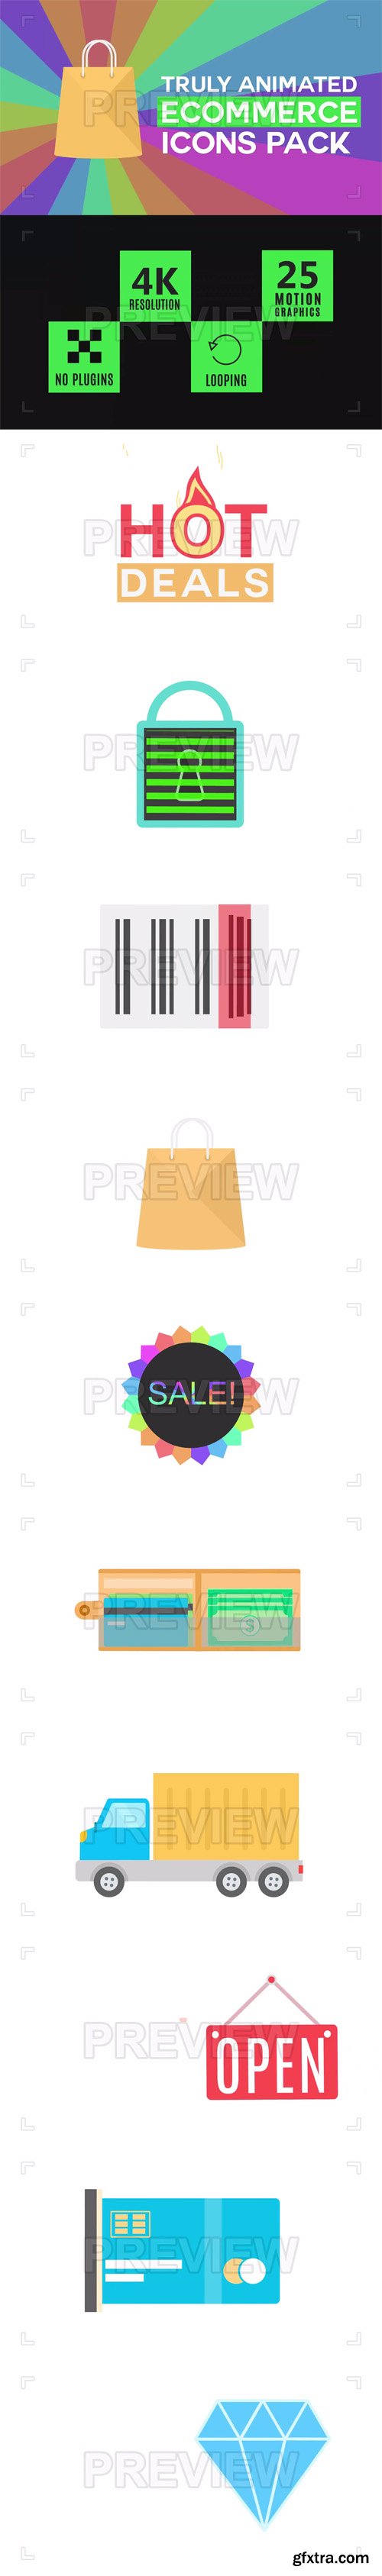 MA - Animated E-Commerce Icons Pack